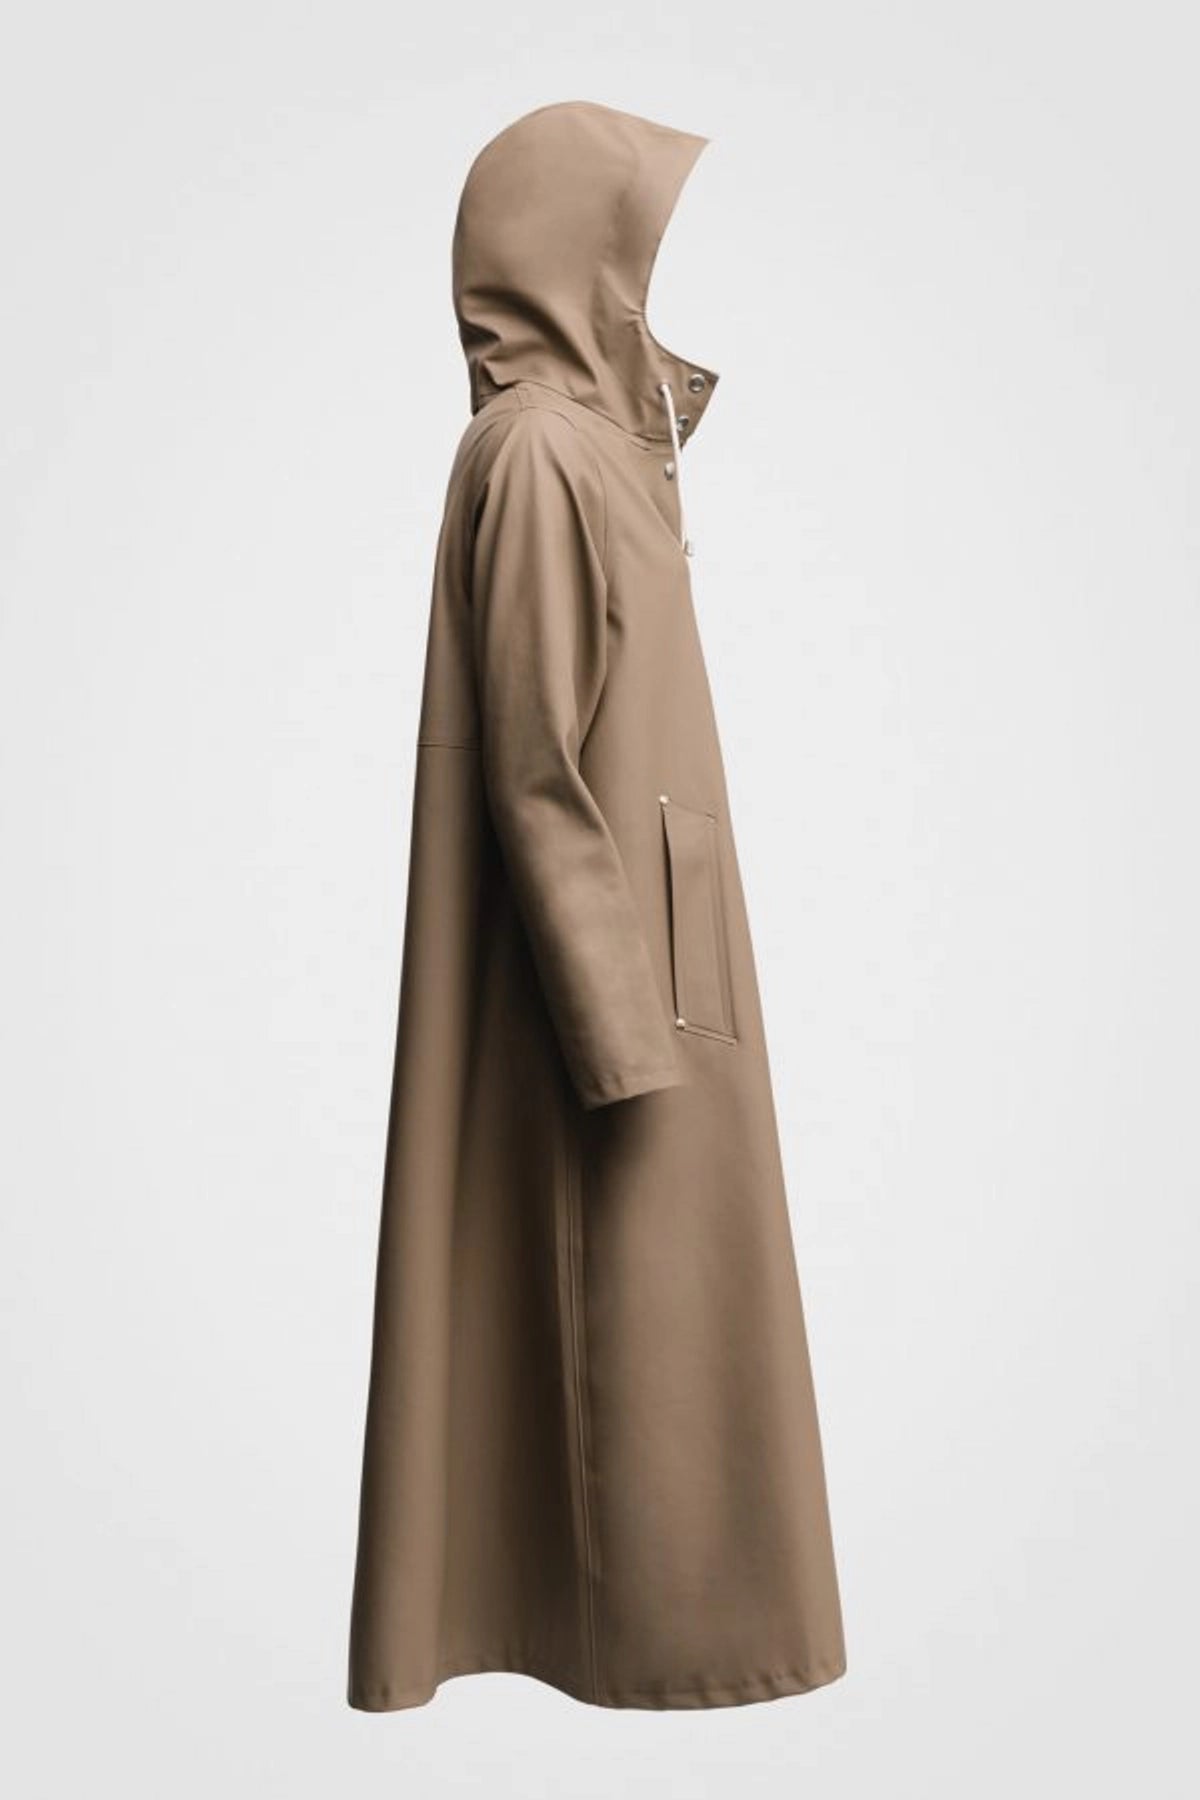 Stutterheim Mosebacke long raincoat mole brown flowing A-line women | PIPE AND ROW boutique